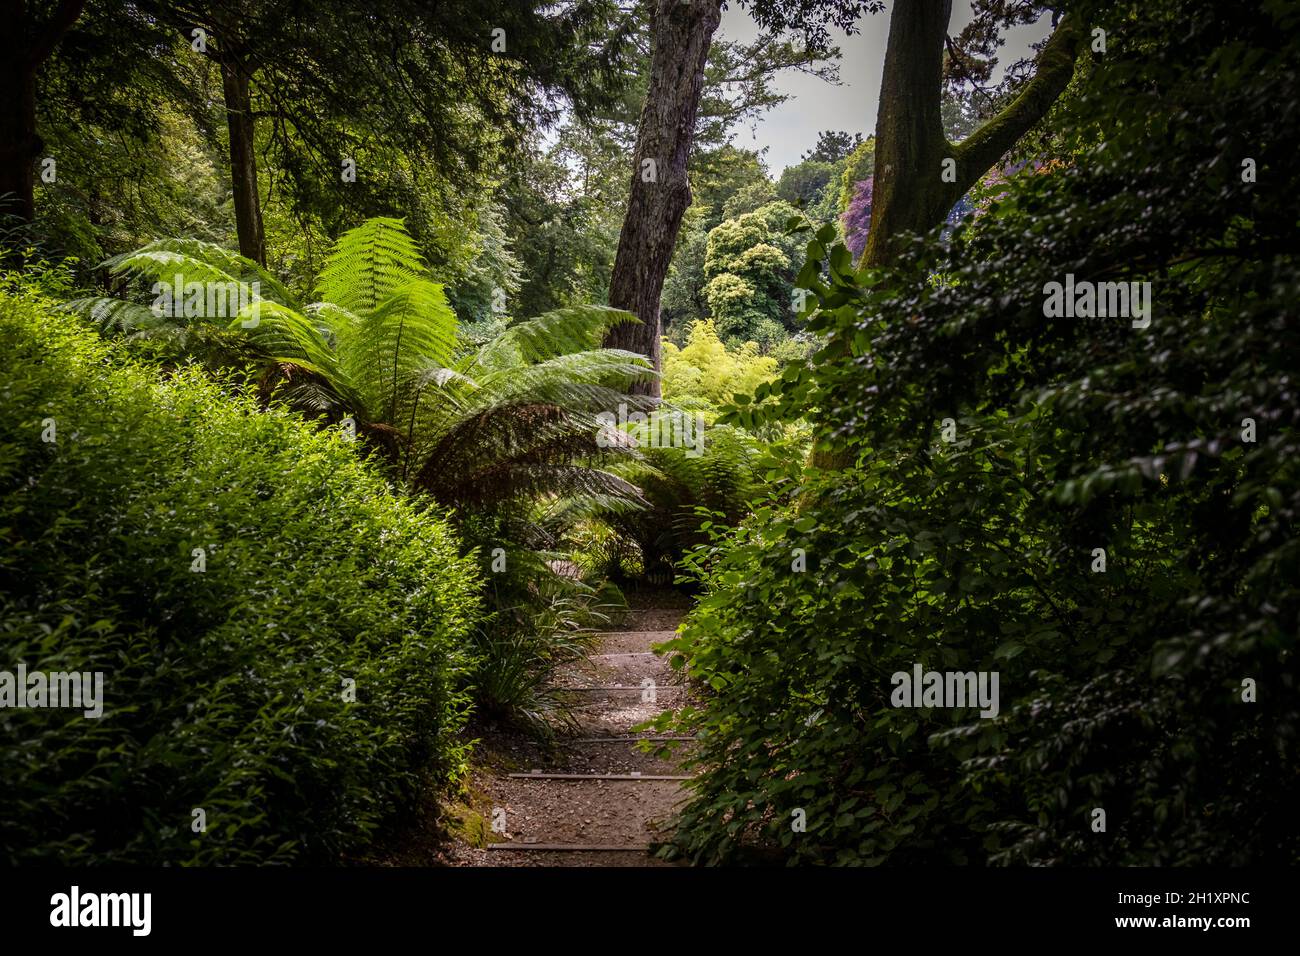 Lush vegetation in the sub tropical Trebah Gardens in Cornwall. Stock Photo